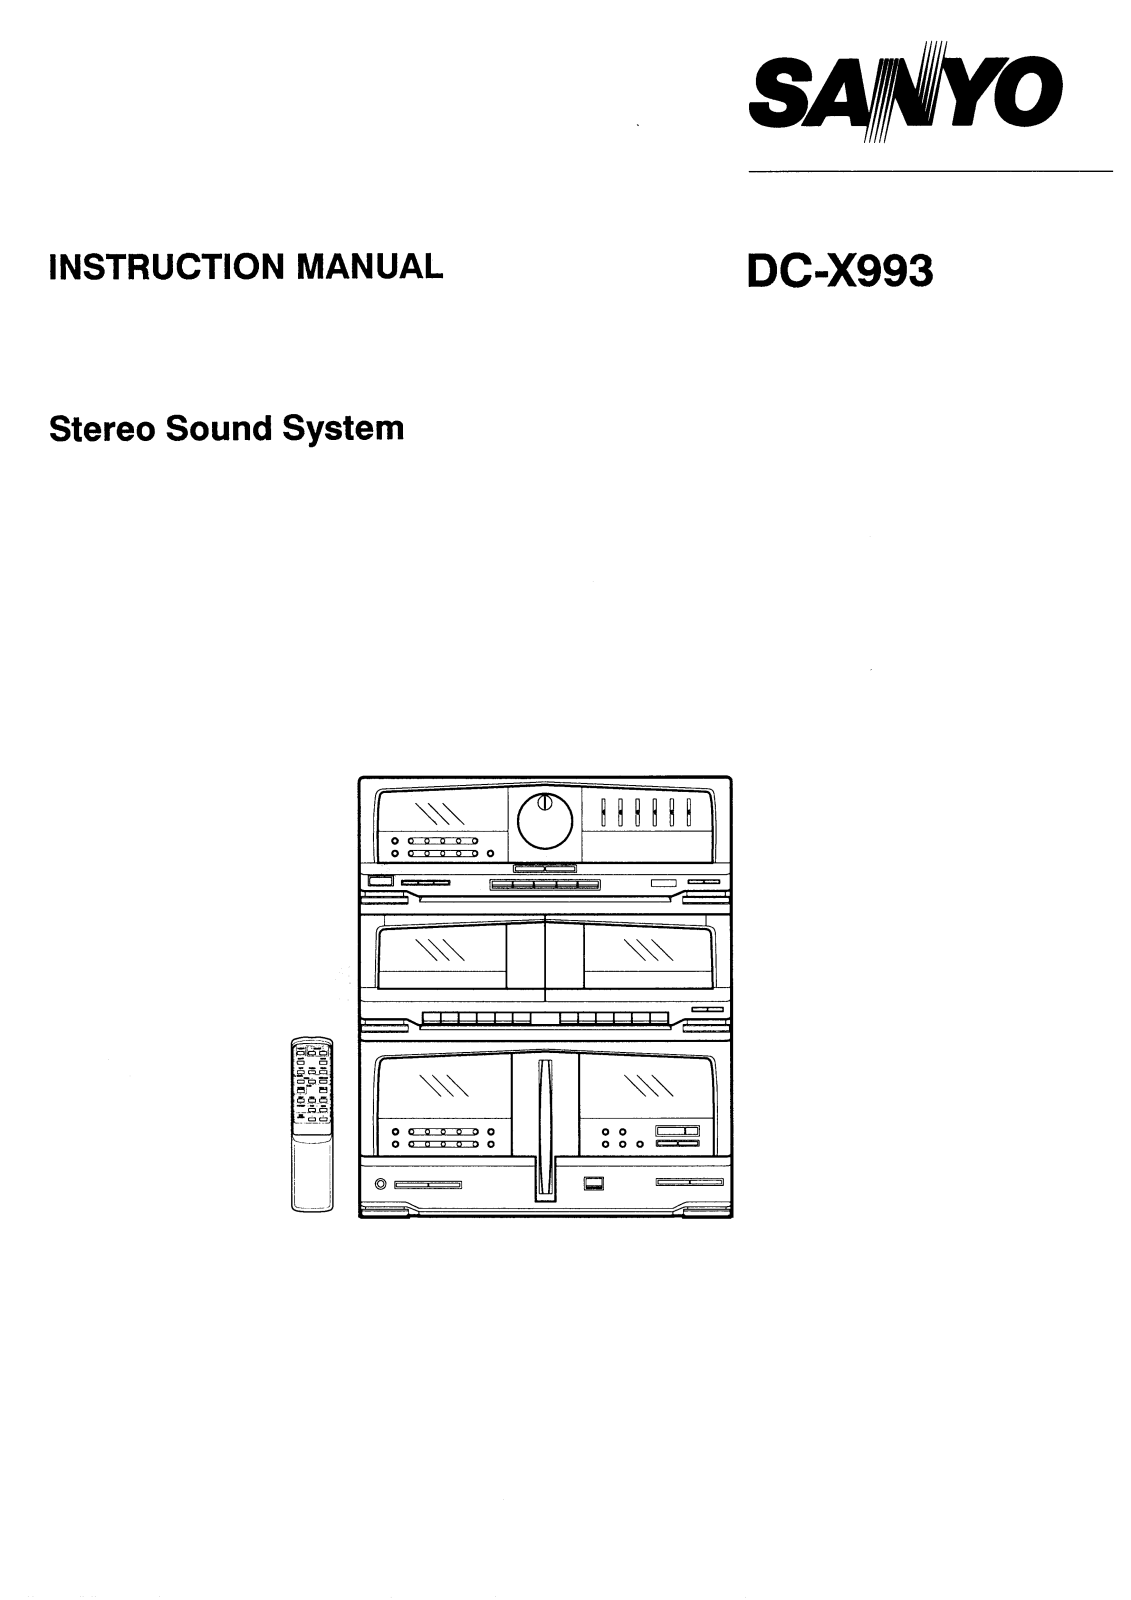 Sanyo DC-X993 Instruction Manual